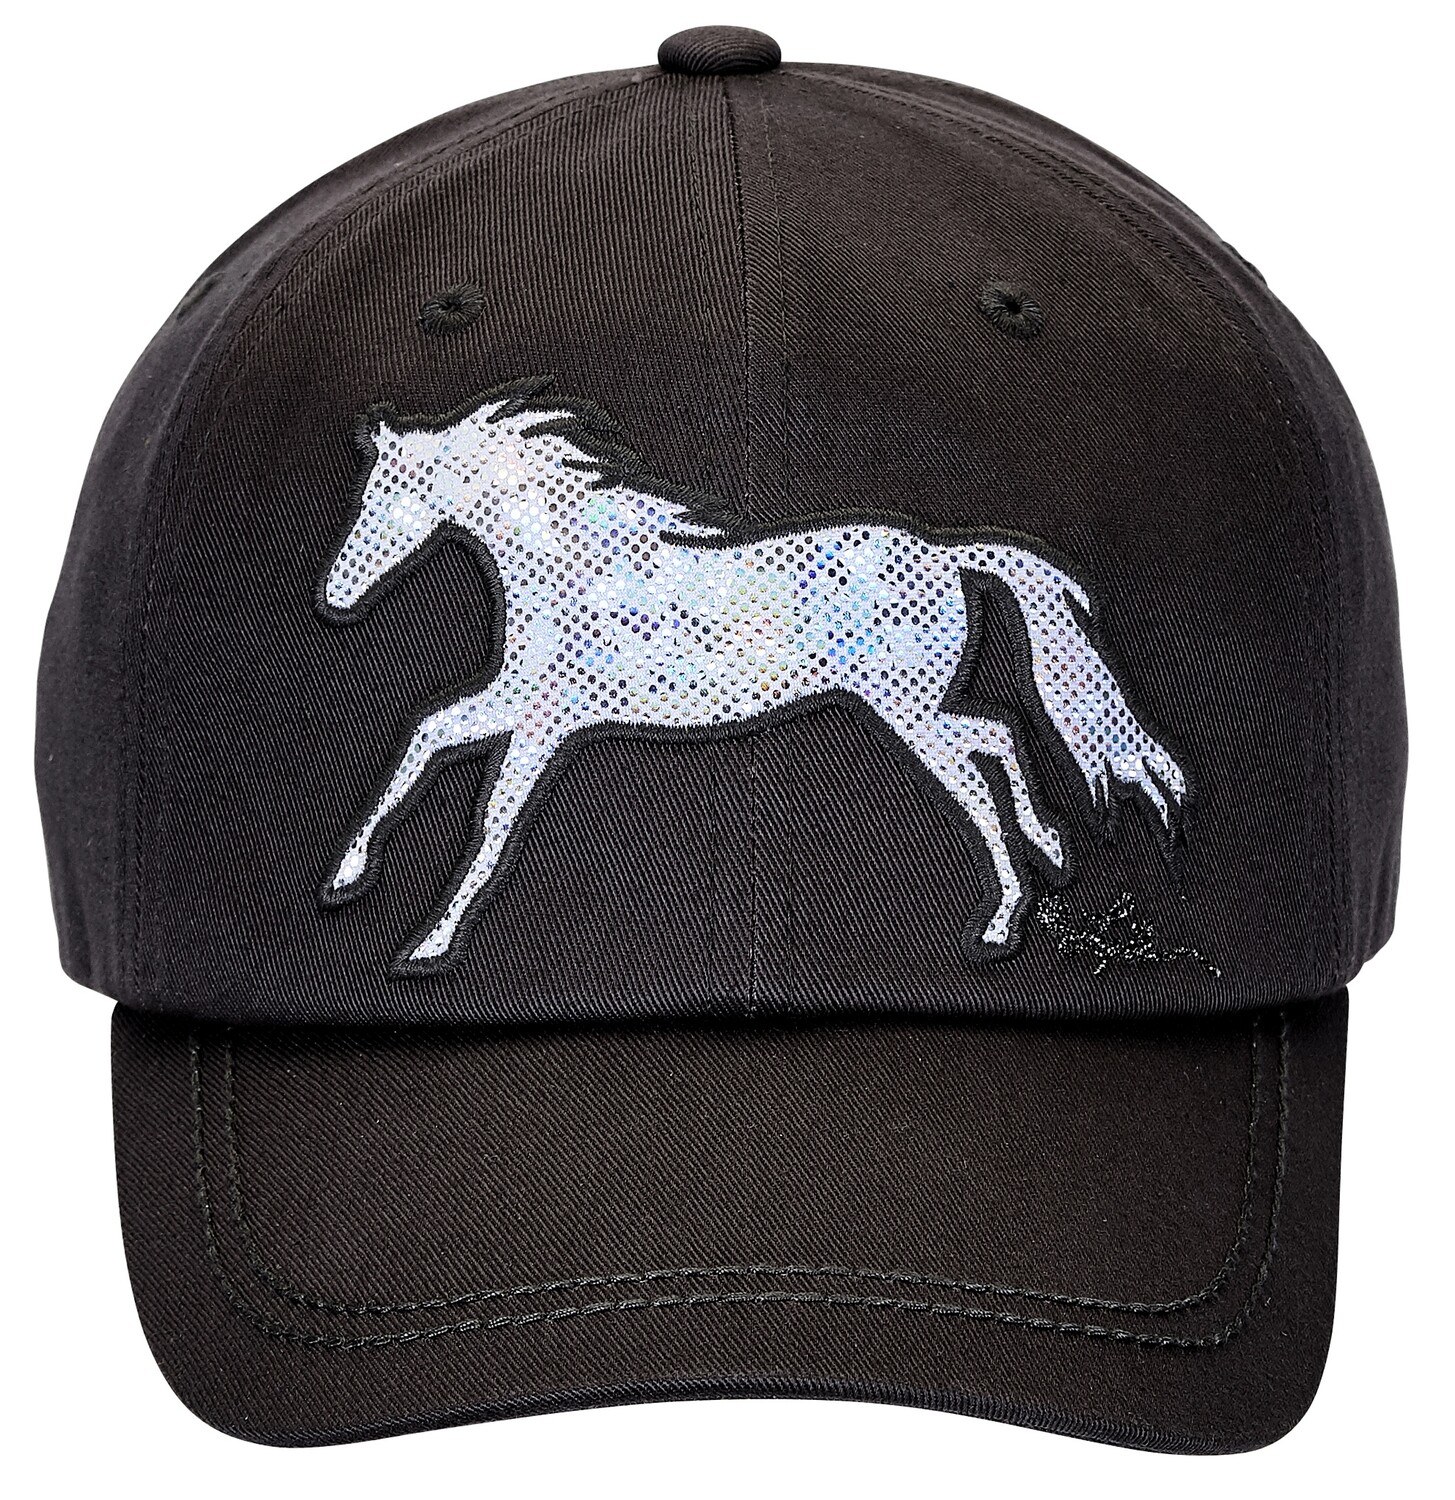 Hat - Black w/Shiny Horse